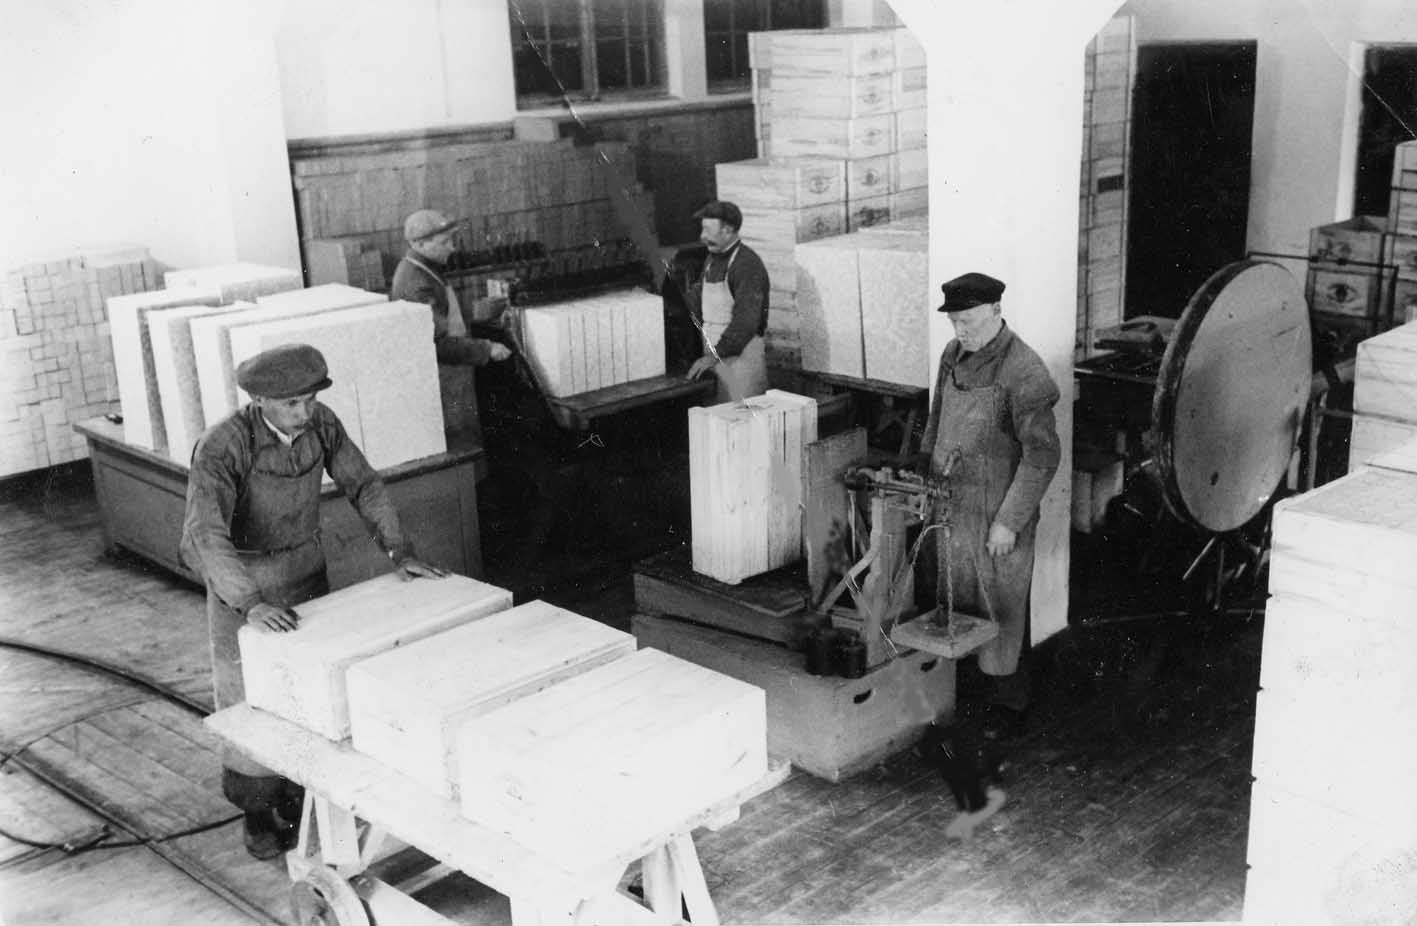 Packaging of soap in a. Frederking soap factory in Tartu in 1939.